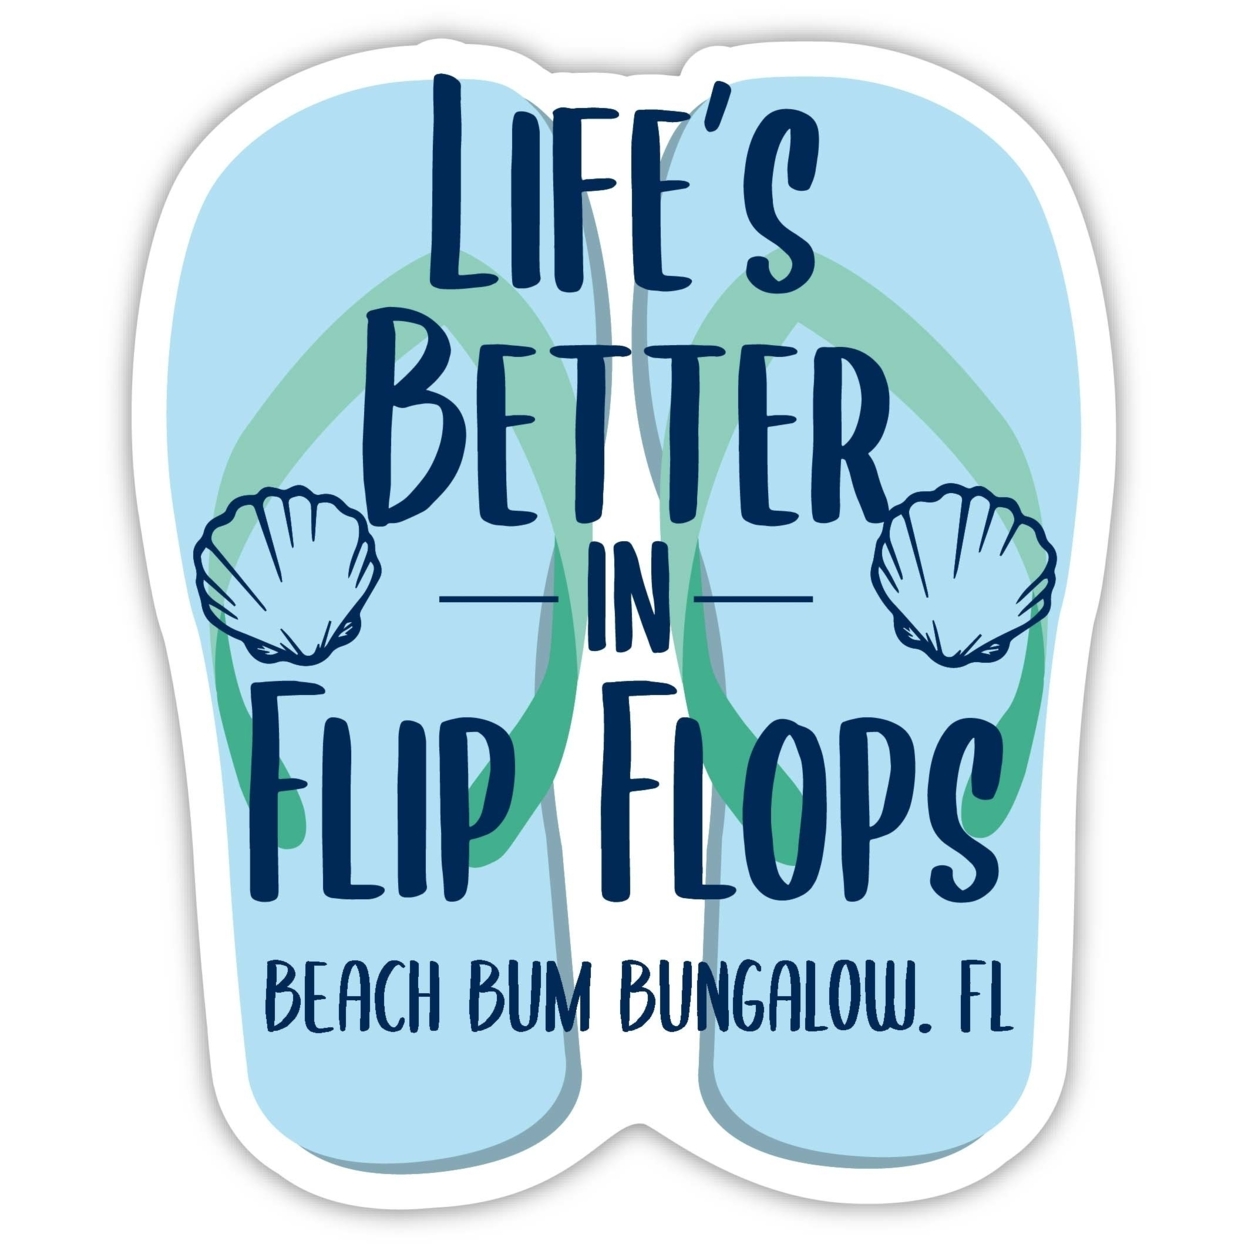 Beach Bum Bungalow Florida Souvenir 4 Inch Vinyl Decal Sticker Flip Flop Design